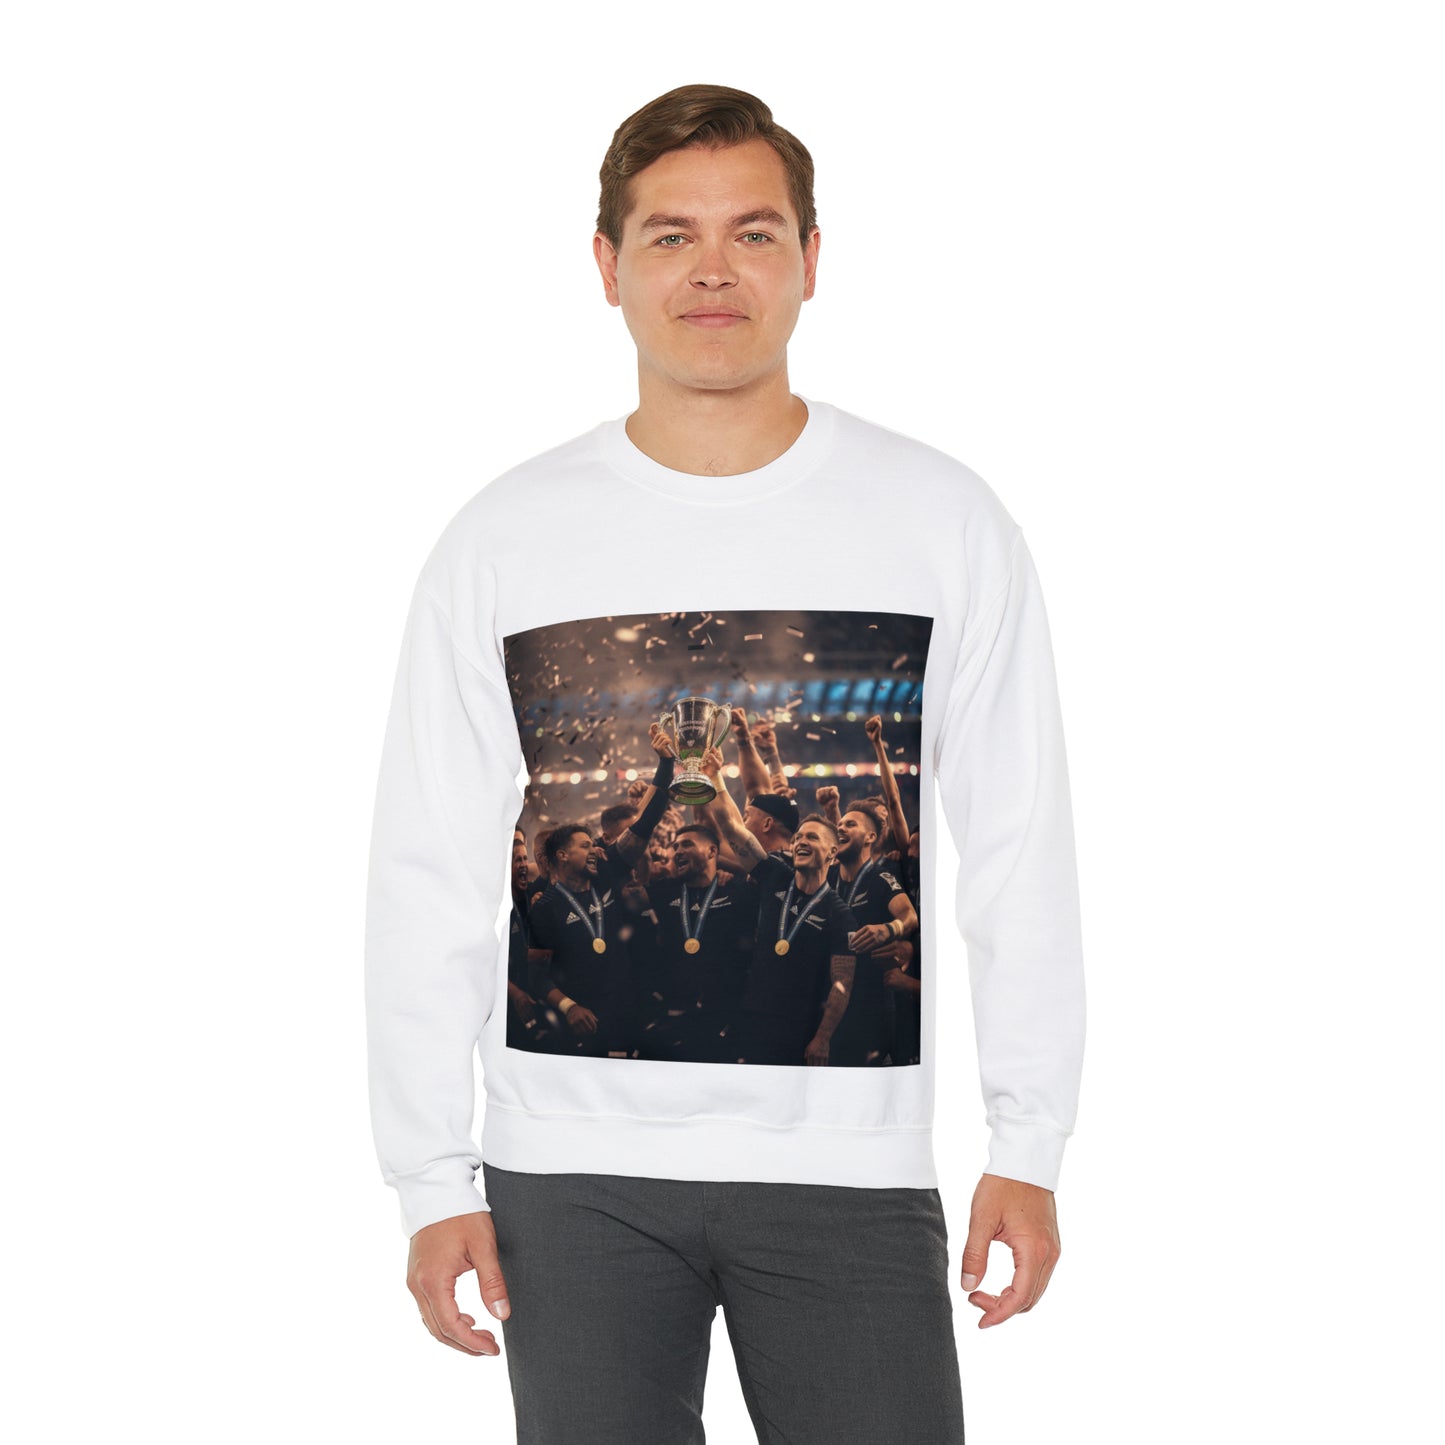 All Blacks World Cup Celebration - light sweatshirts